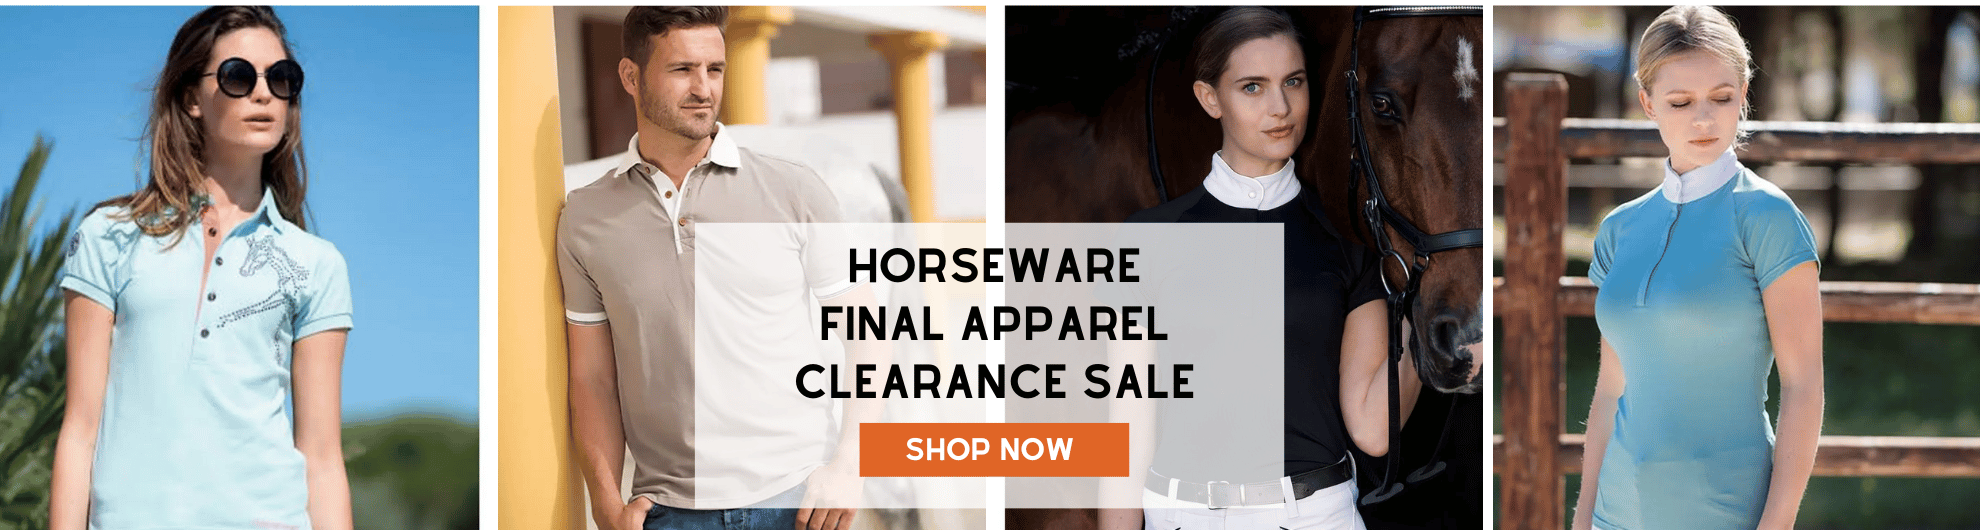 Horseware Final Apparel Clearance Sale